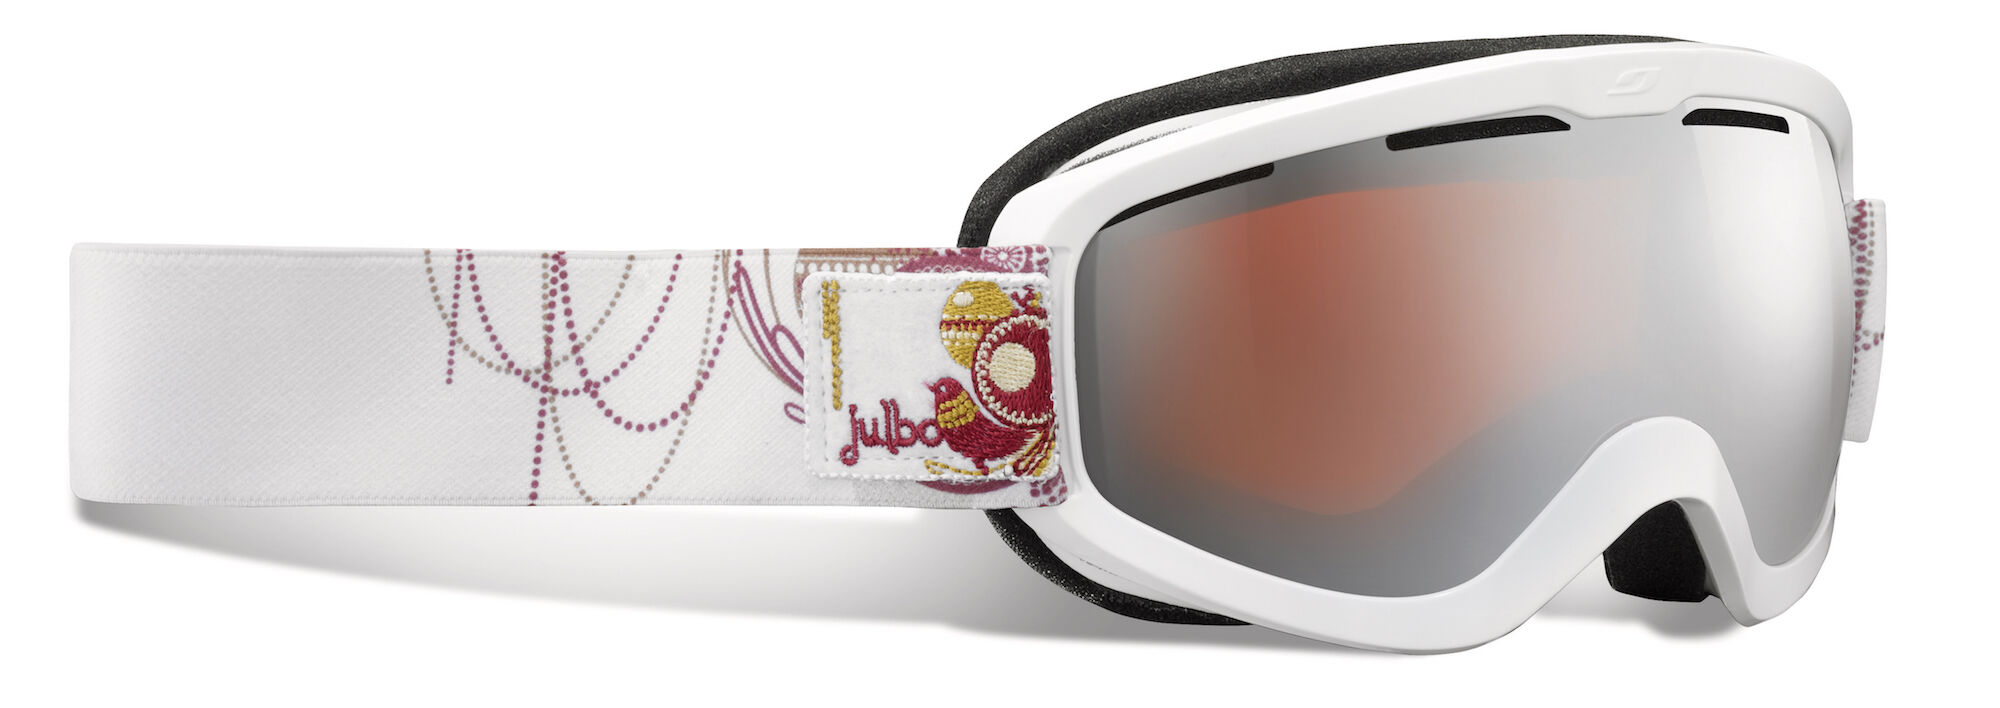 Julbo Vega günstig kaufen - Skibrille - Damen